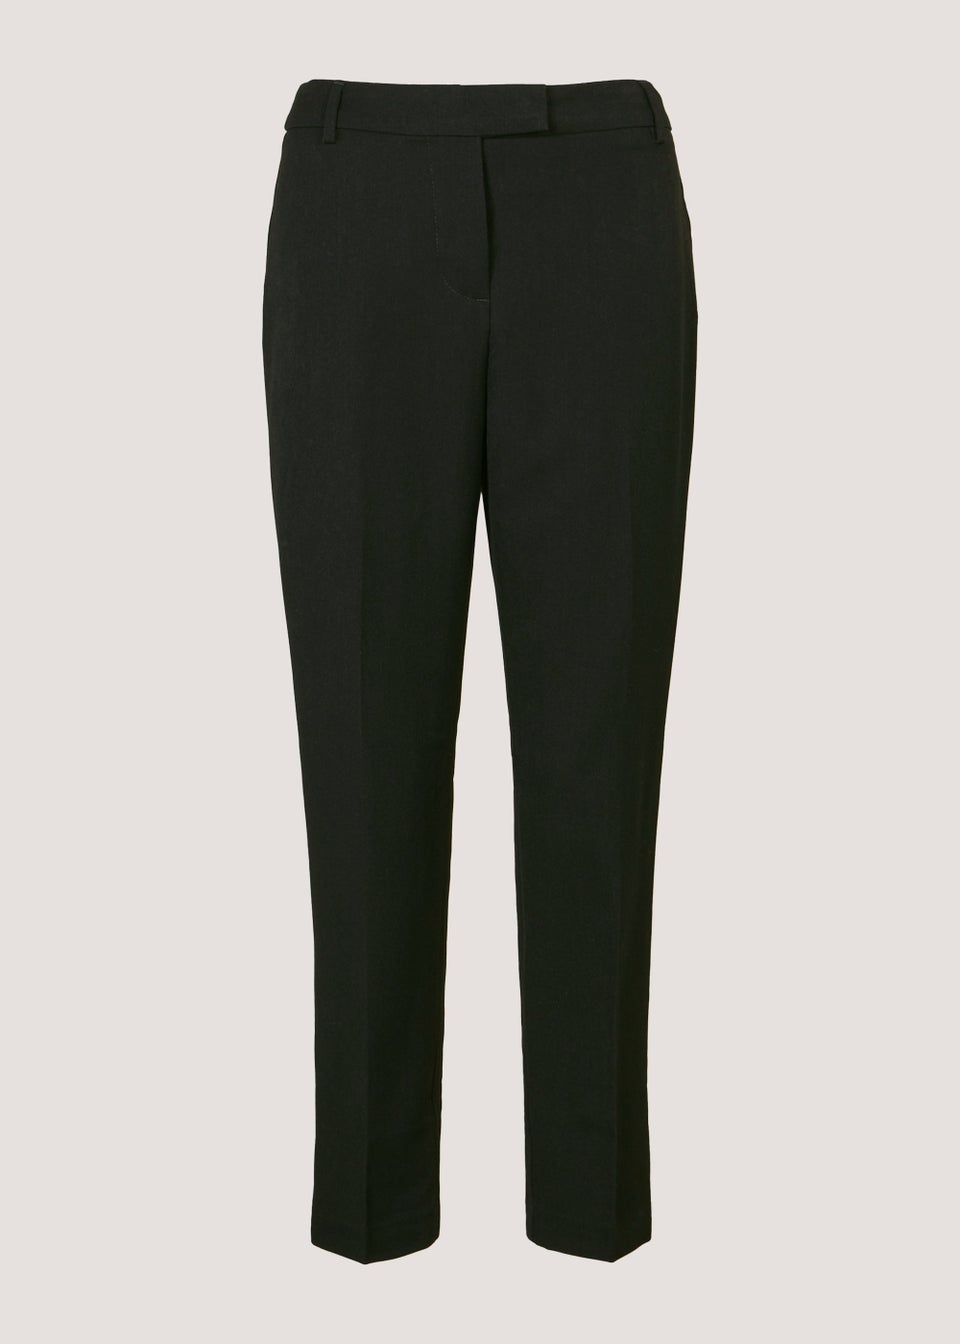 Women's Black Wide Leg Pants & Trousers - Express-saigonsouth.com.vn